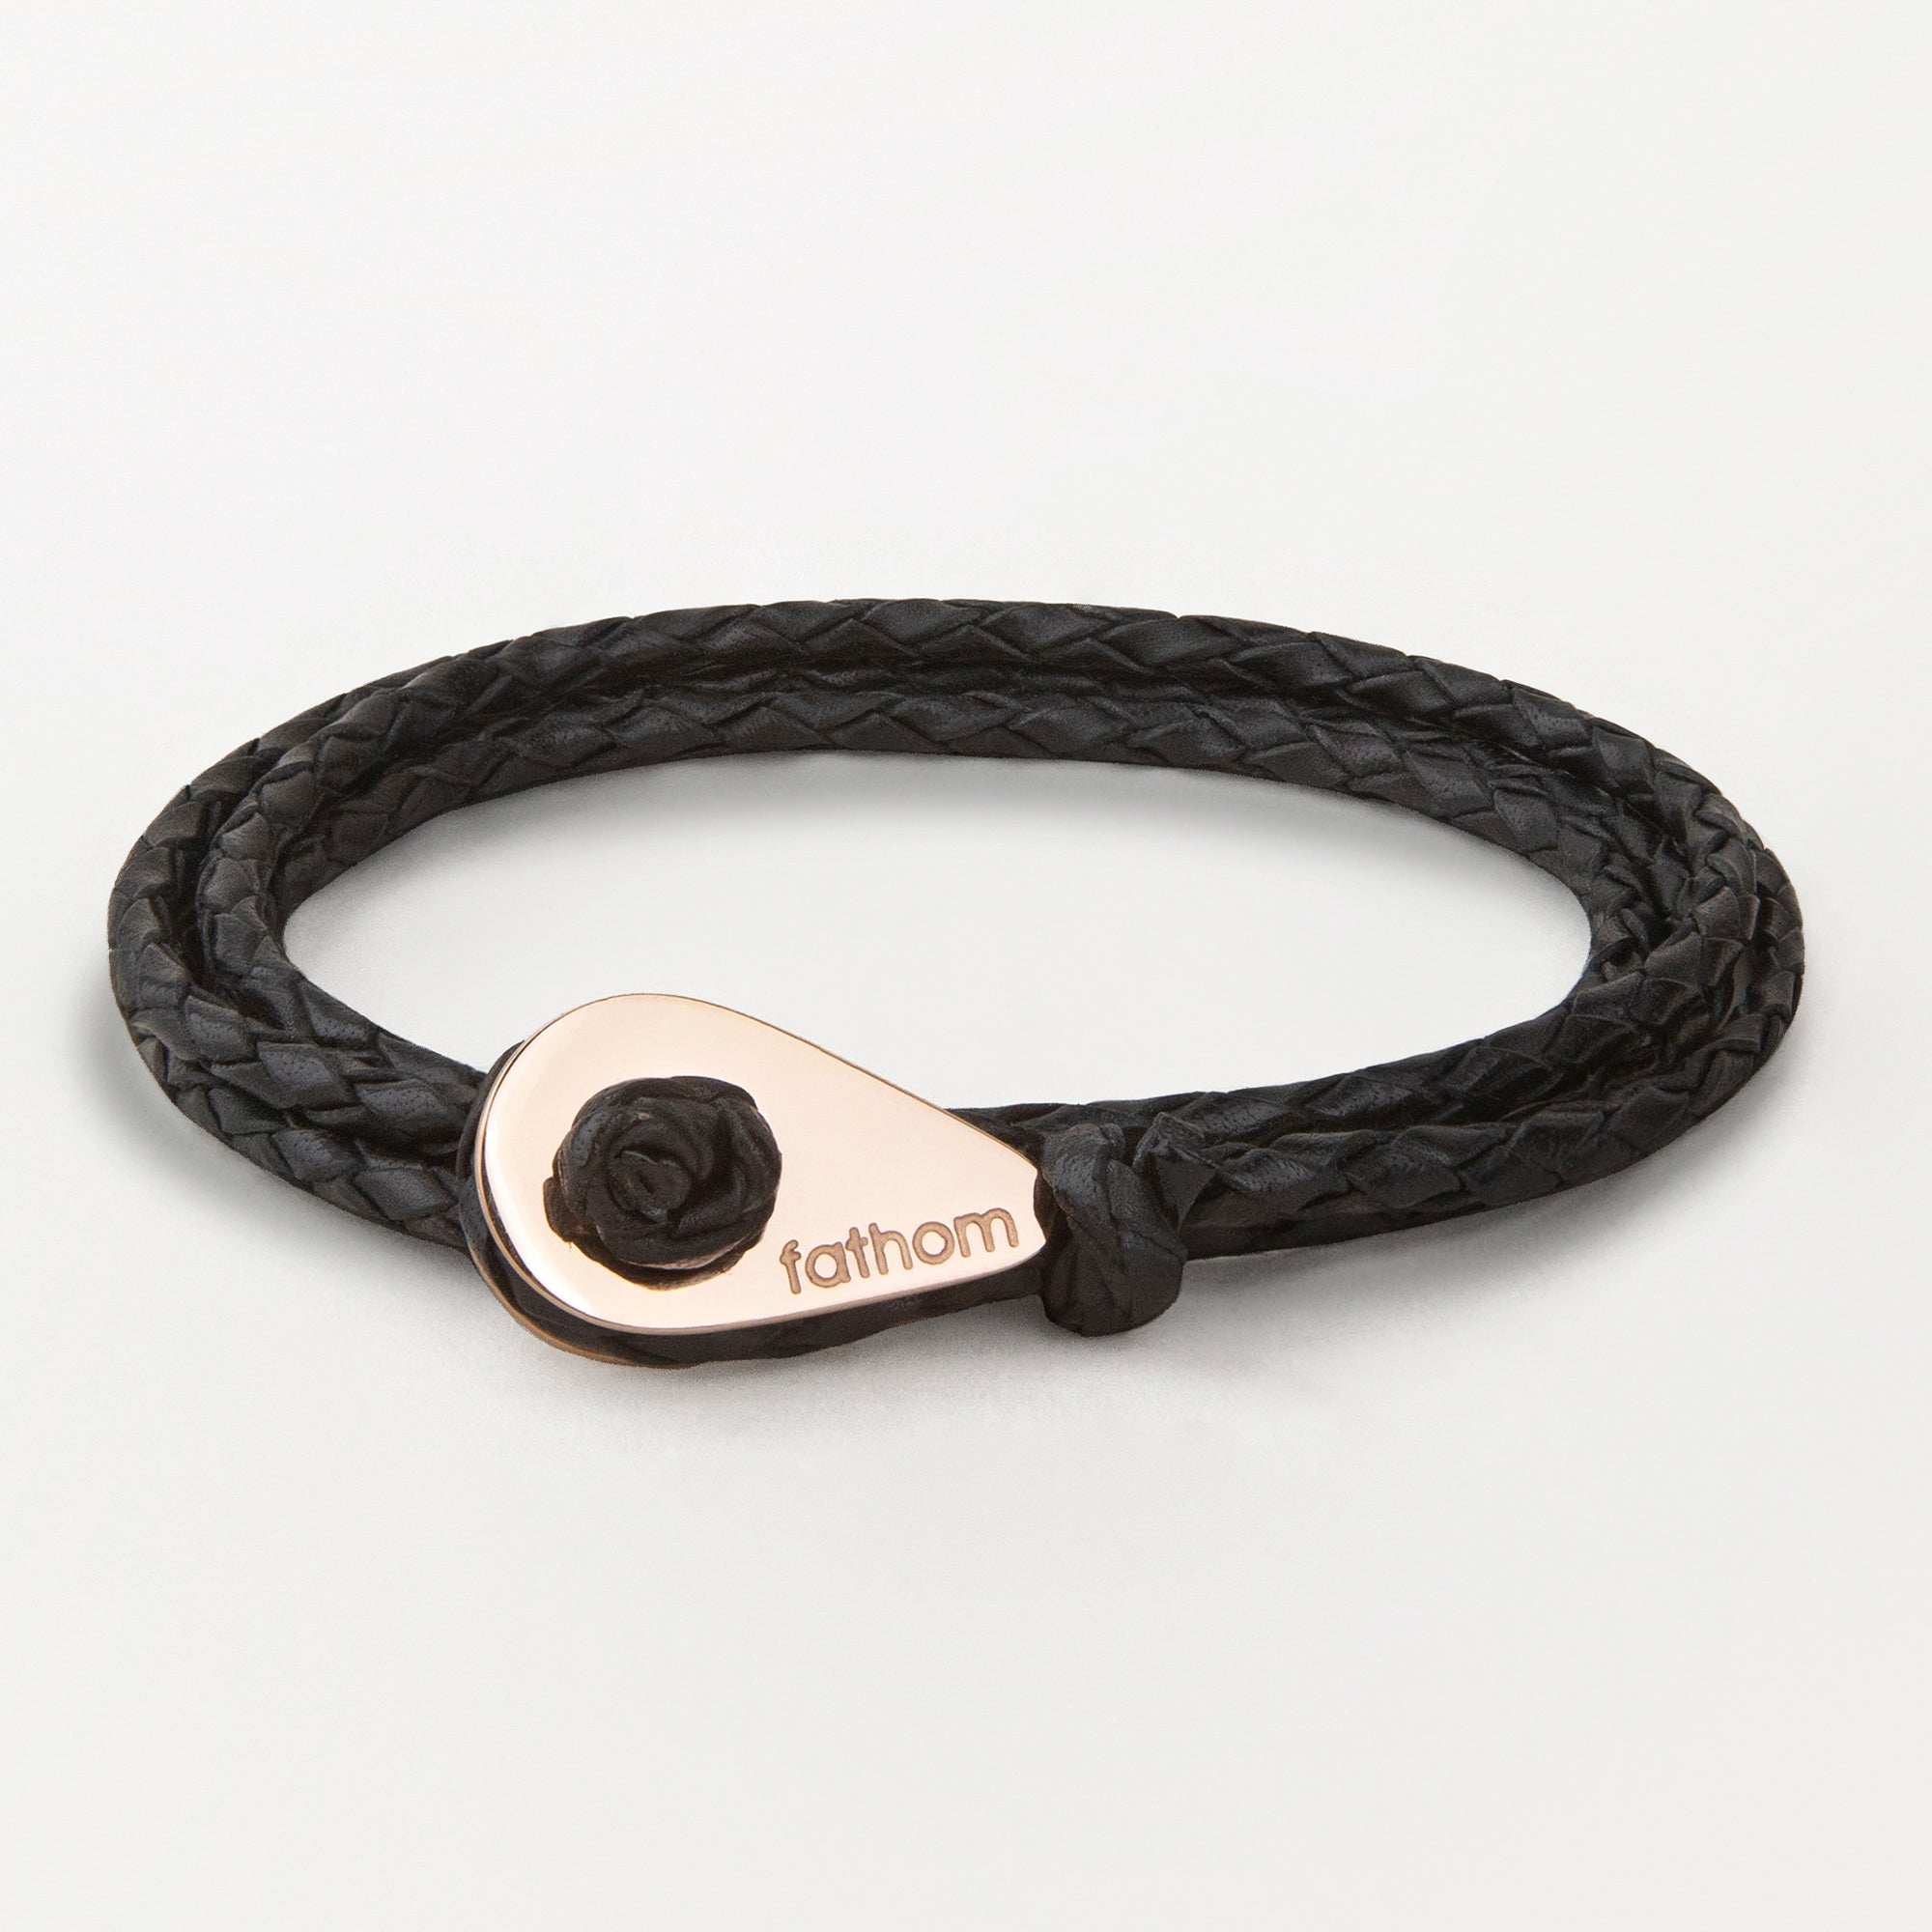 SAN CARLOS Braided Bracelets Wrap Wristbands for Fathom Bracelets – Thimble Leather Charm